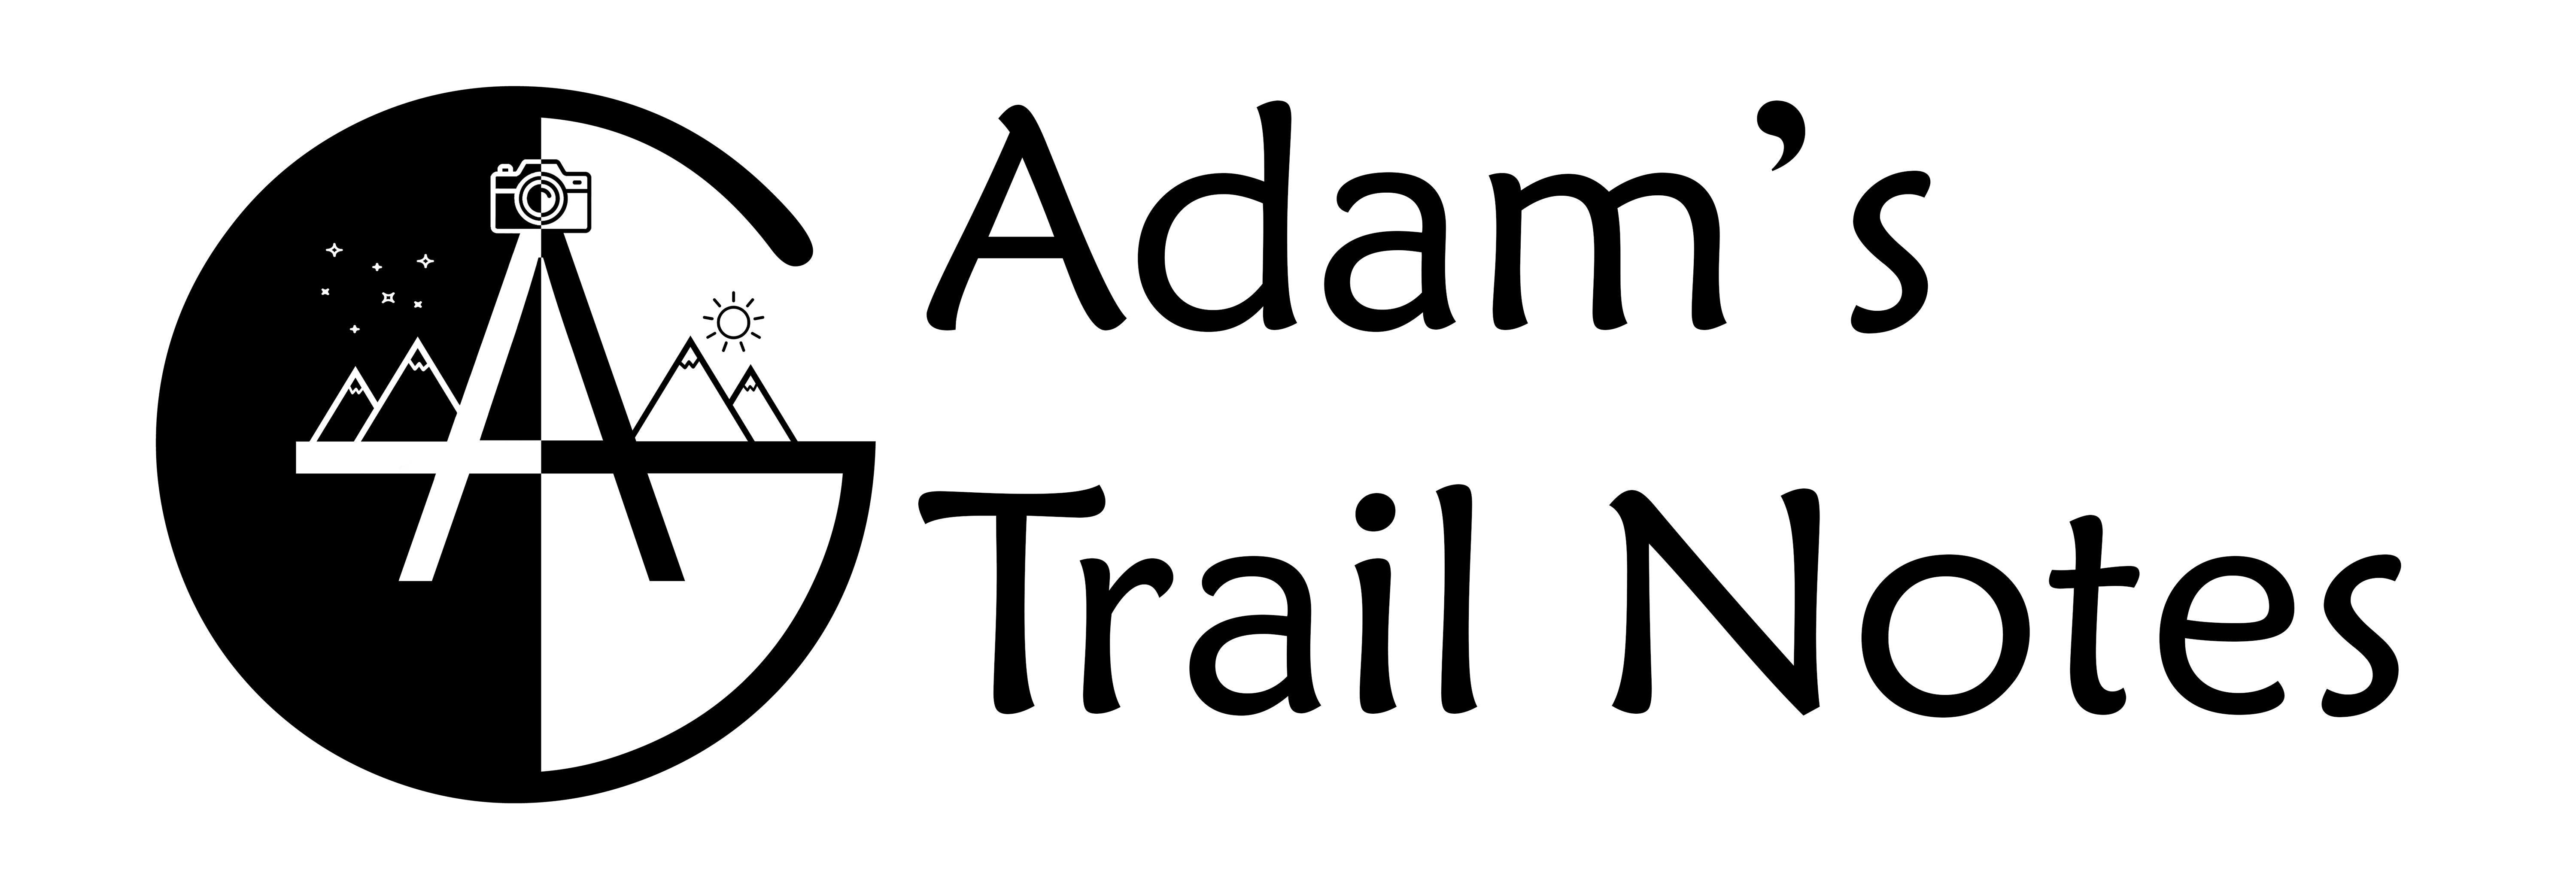 Adam's Trail Notes